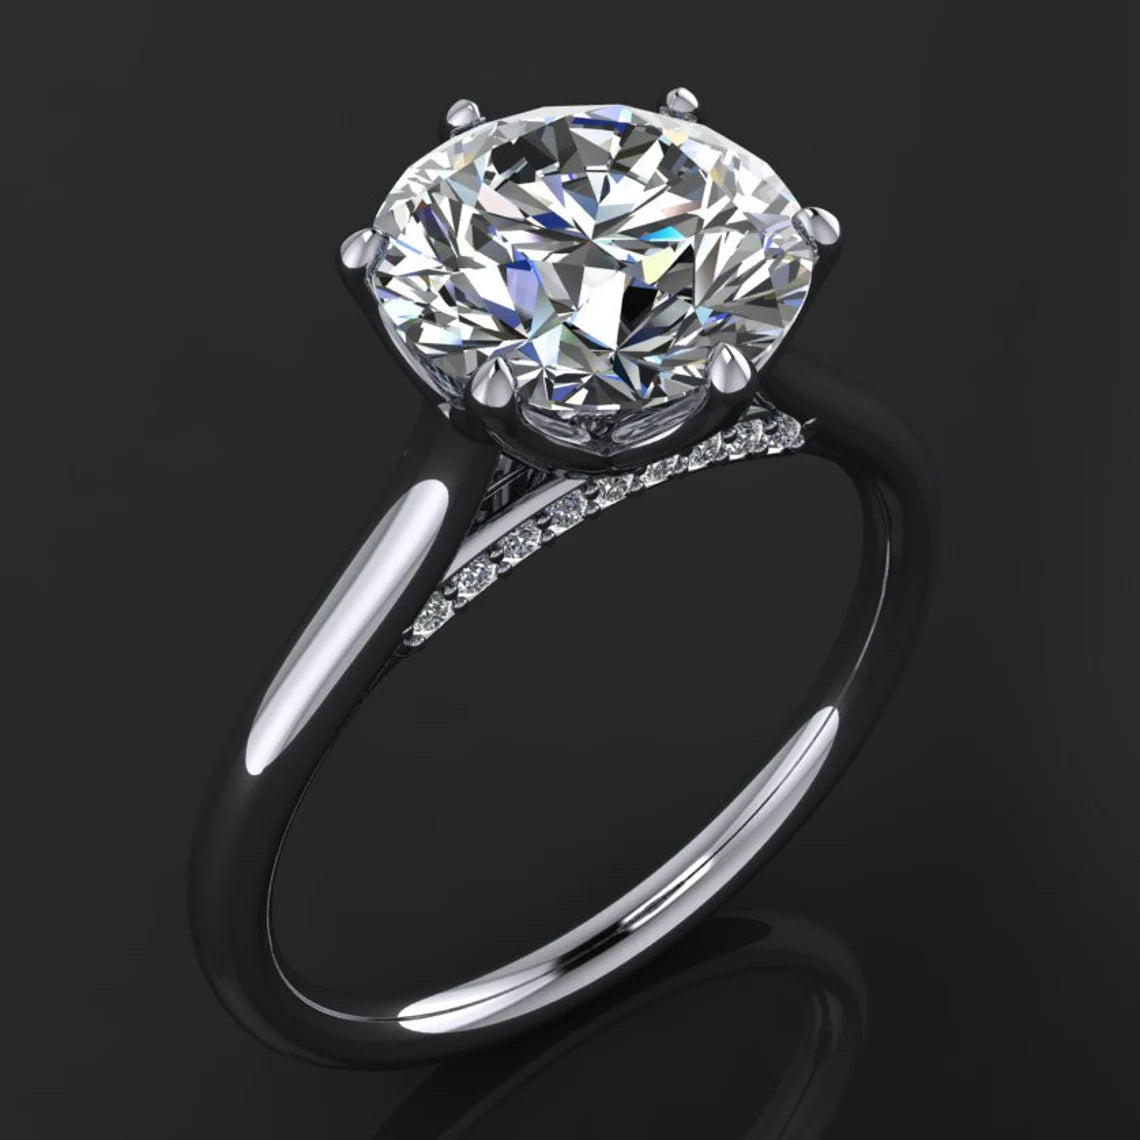 darby ring - 2 carat round NEO moissanite engagement ring, diamond bridge - J Hollywood Designs